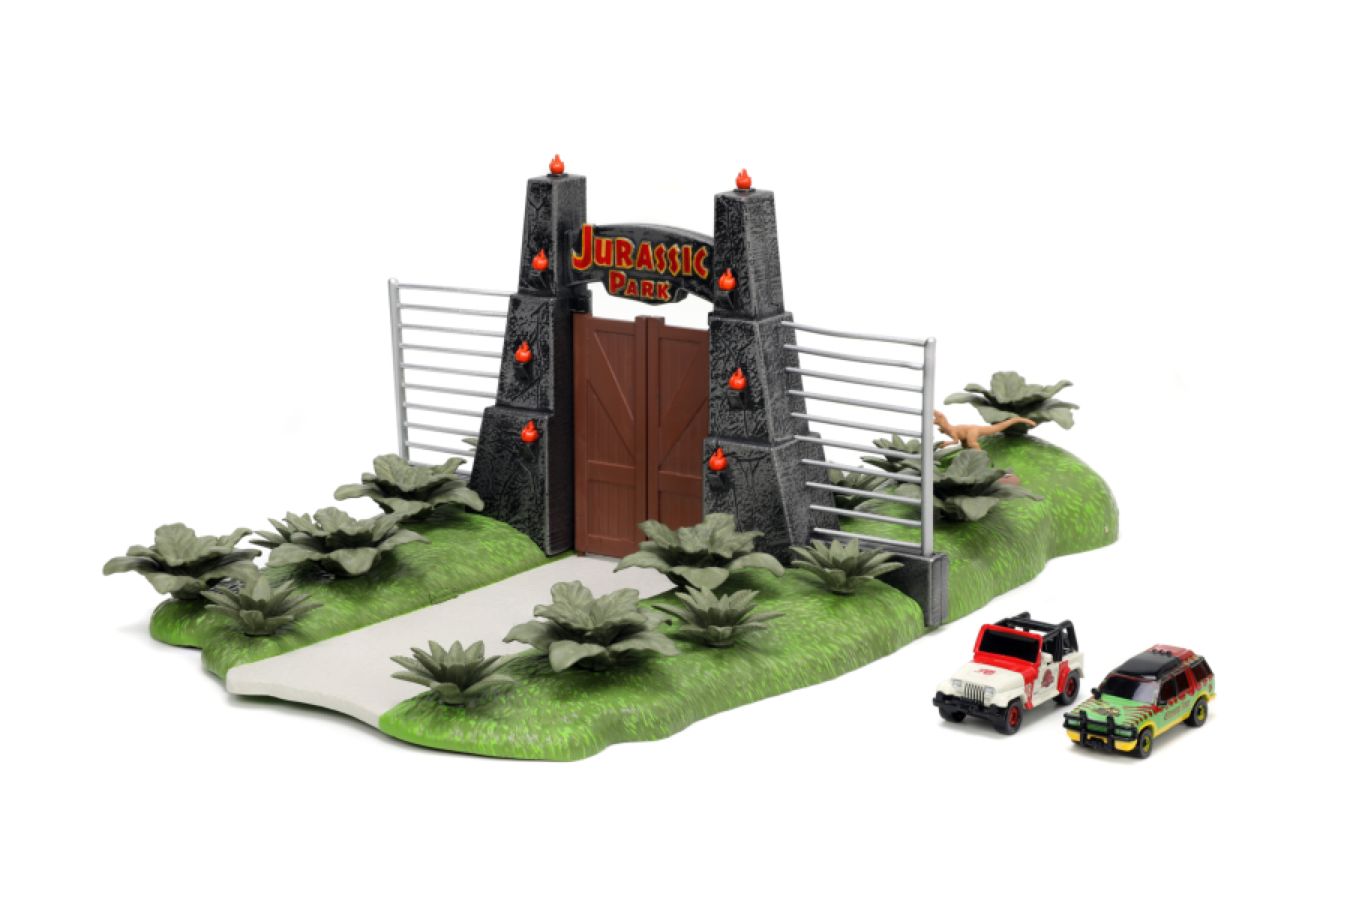 Jurassic Park - Nano Scene Diorama with 2 vehicles